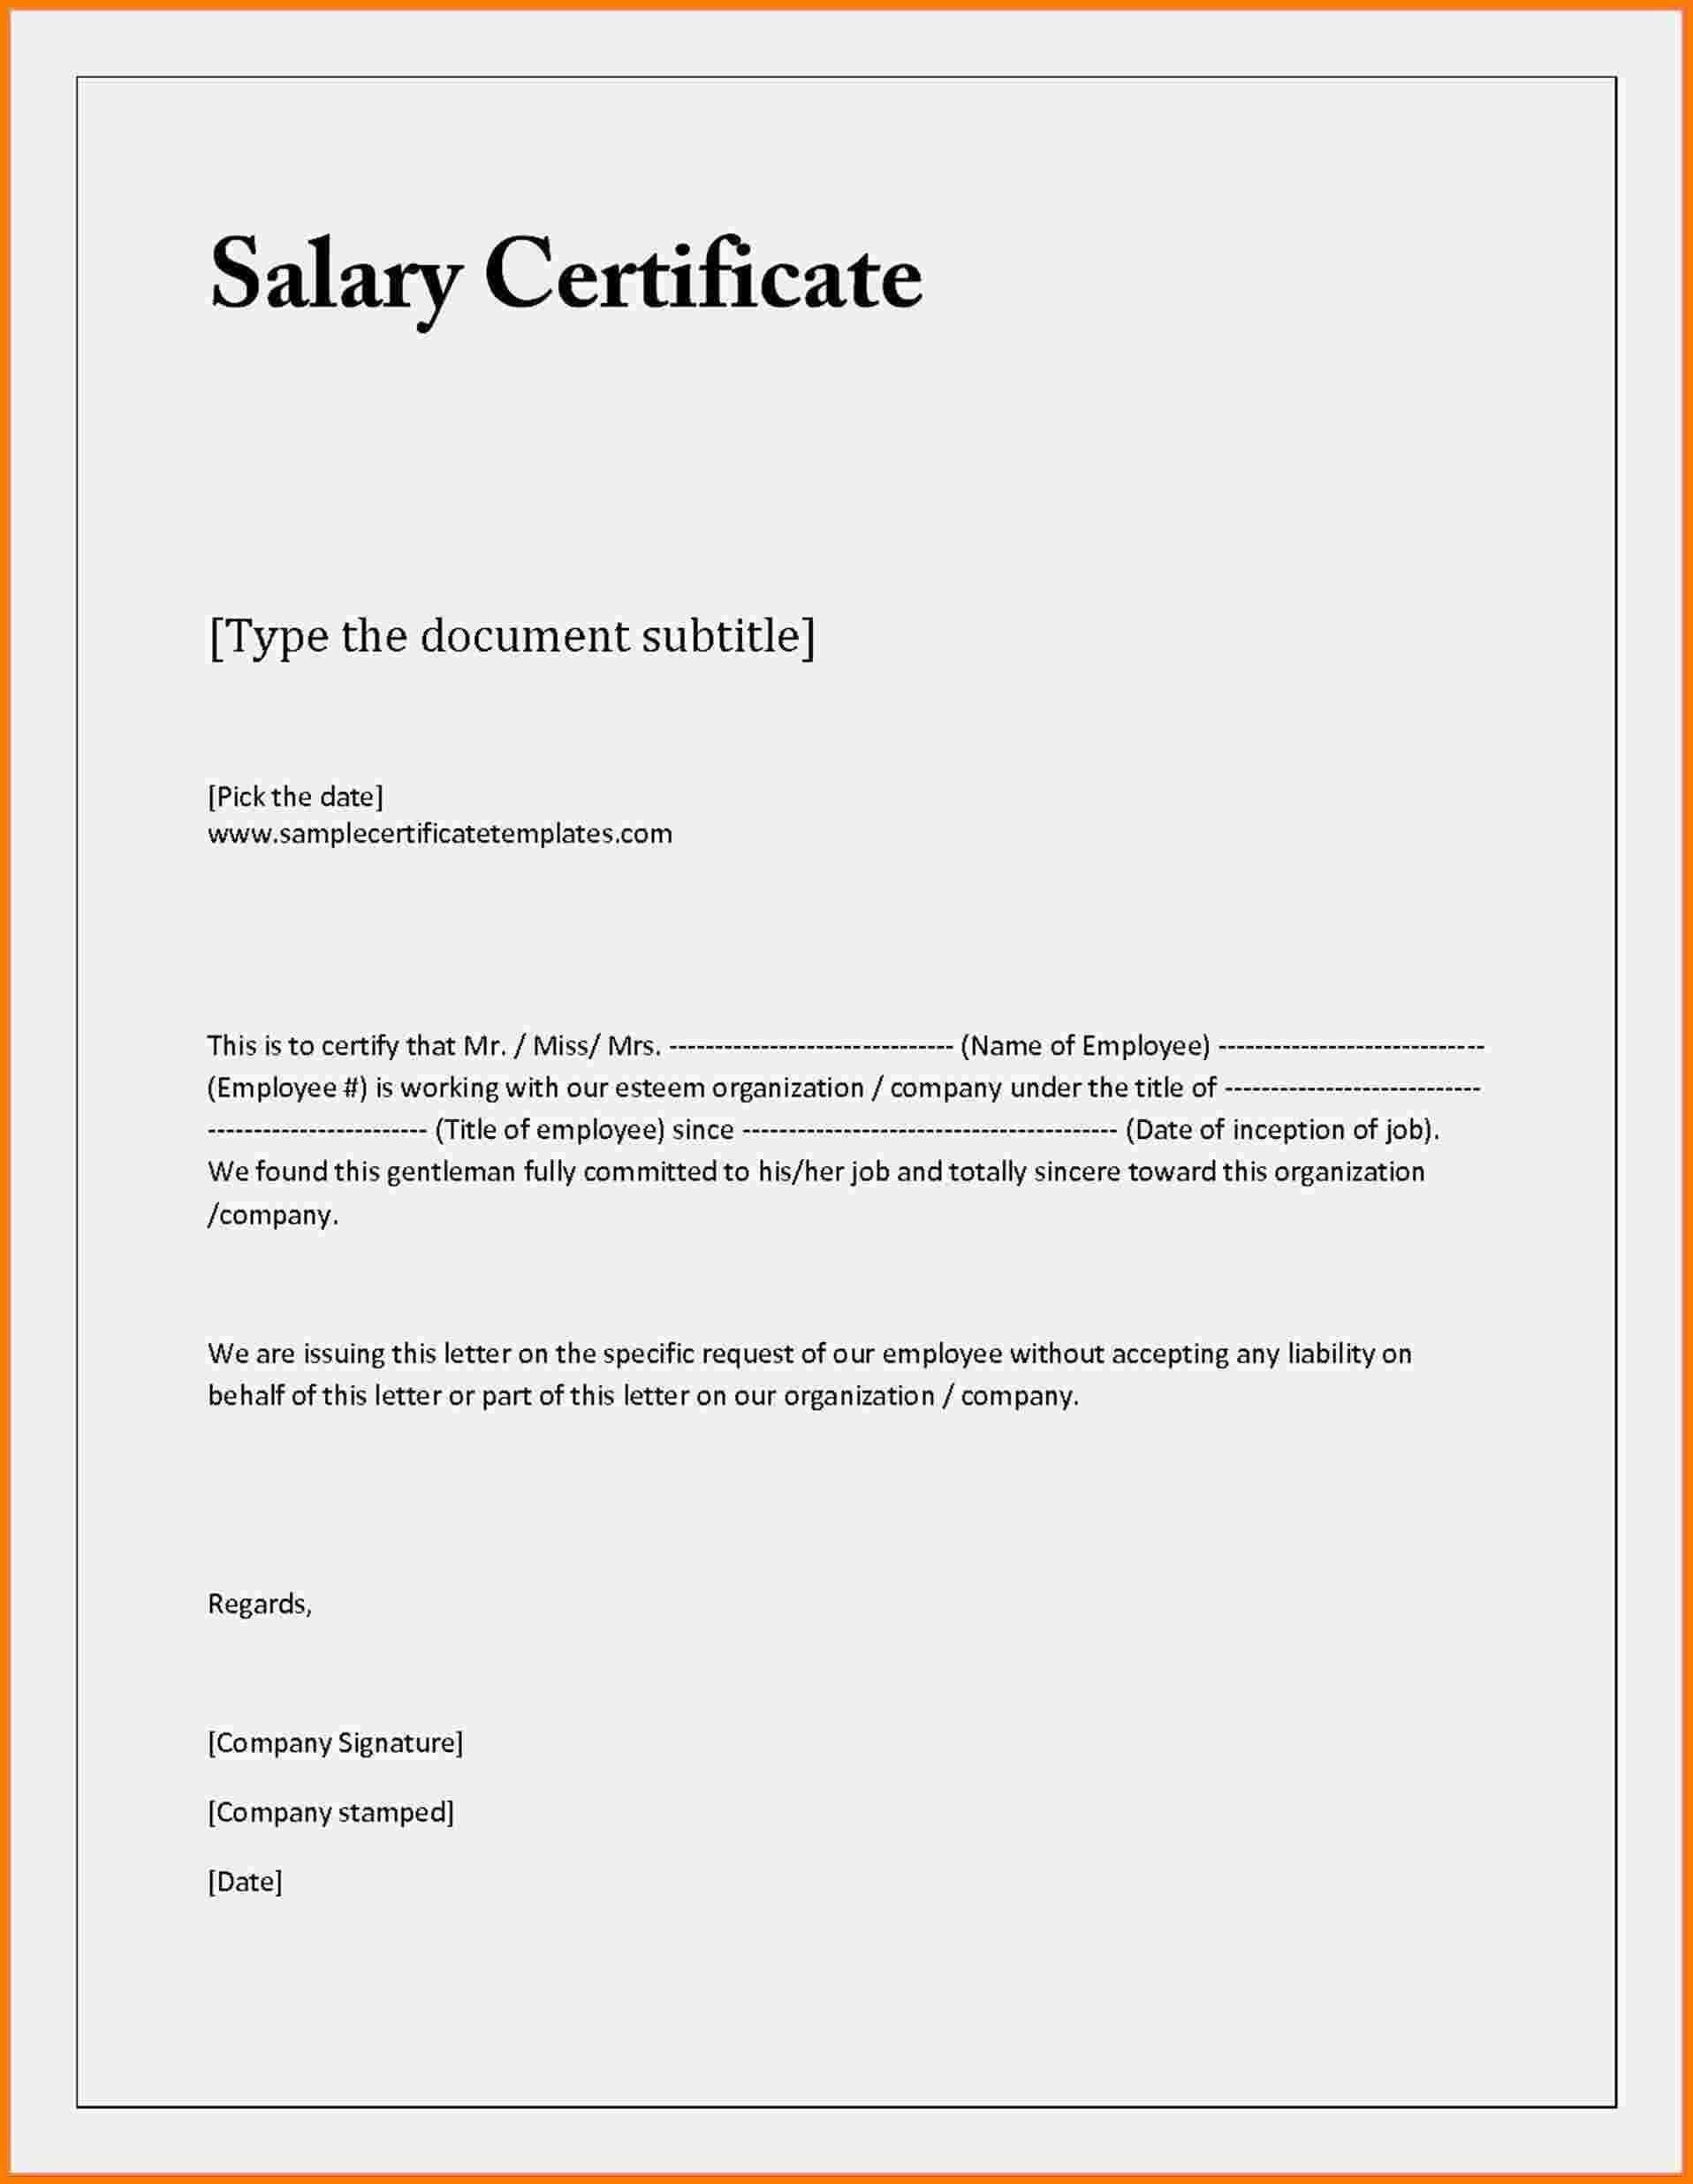 Employee Certificate Of Service Template - Best Business For Employee Certificate Of Service Template